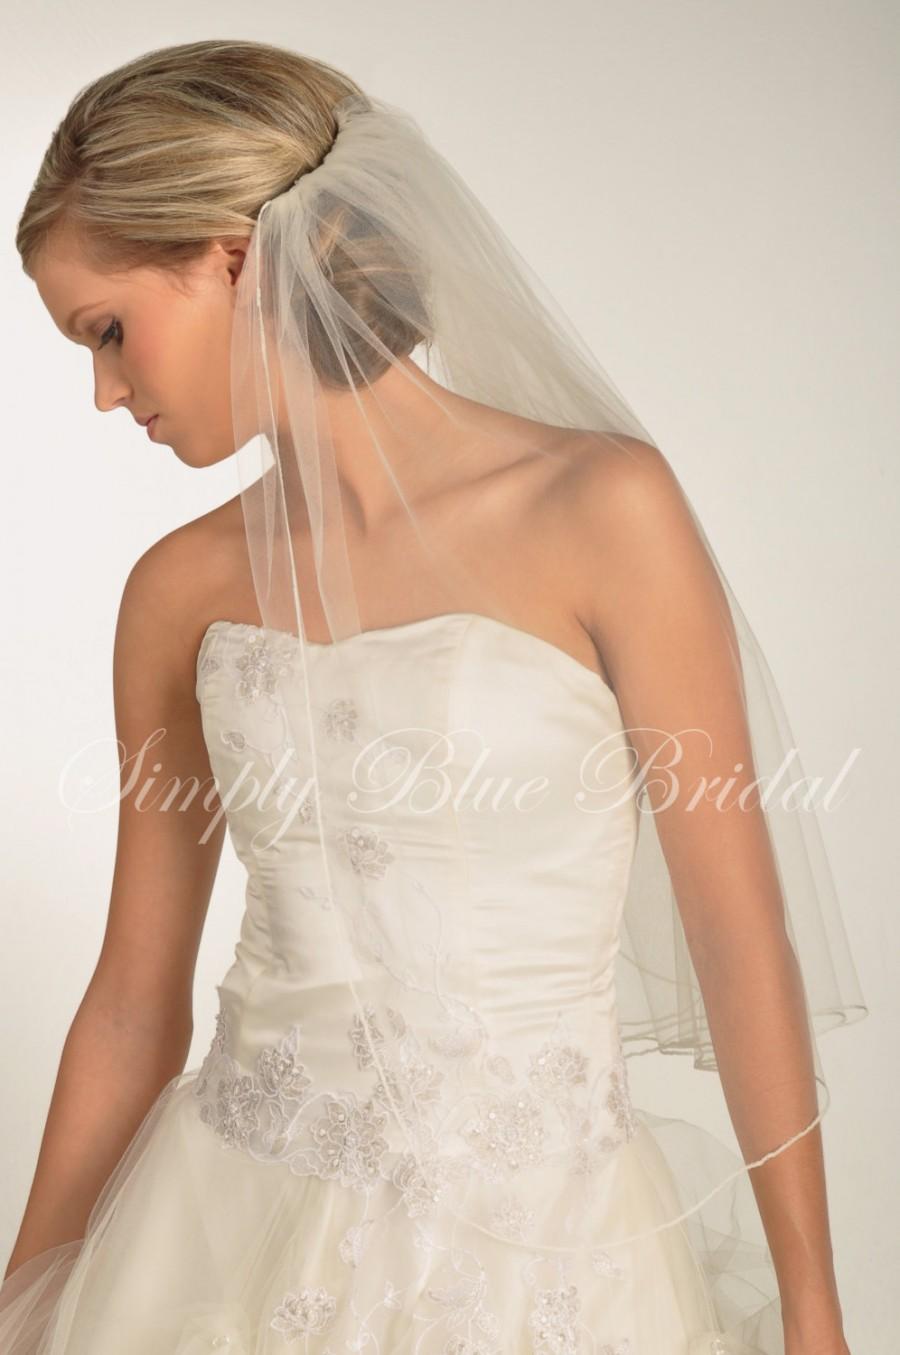 Wedding - Veil for Brides, Short Veil - Simply Pencil Edge Veil - Elbow or Fingertip Length